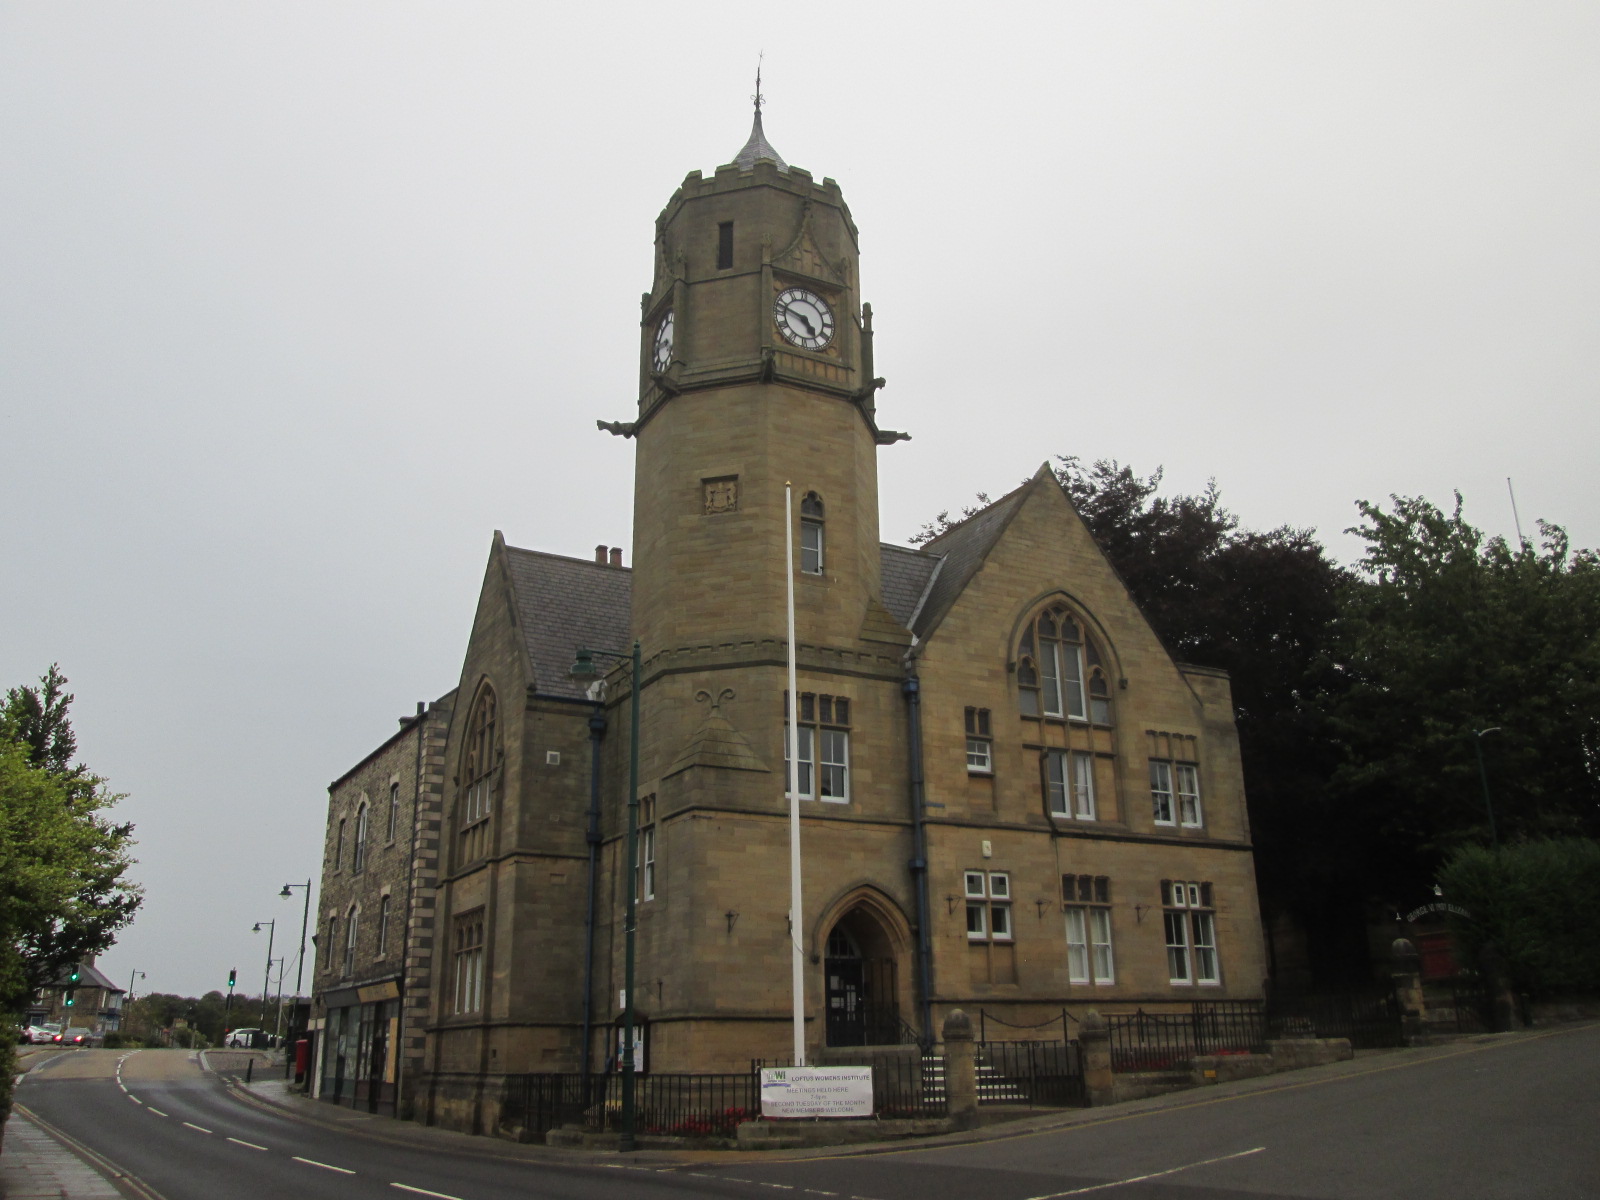 Loftus Town Hall